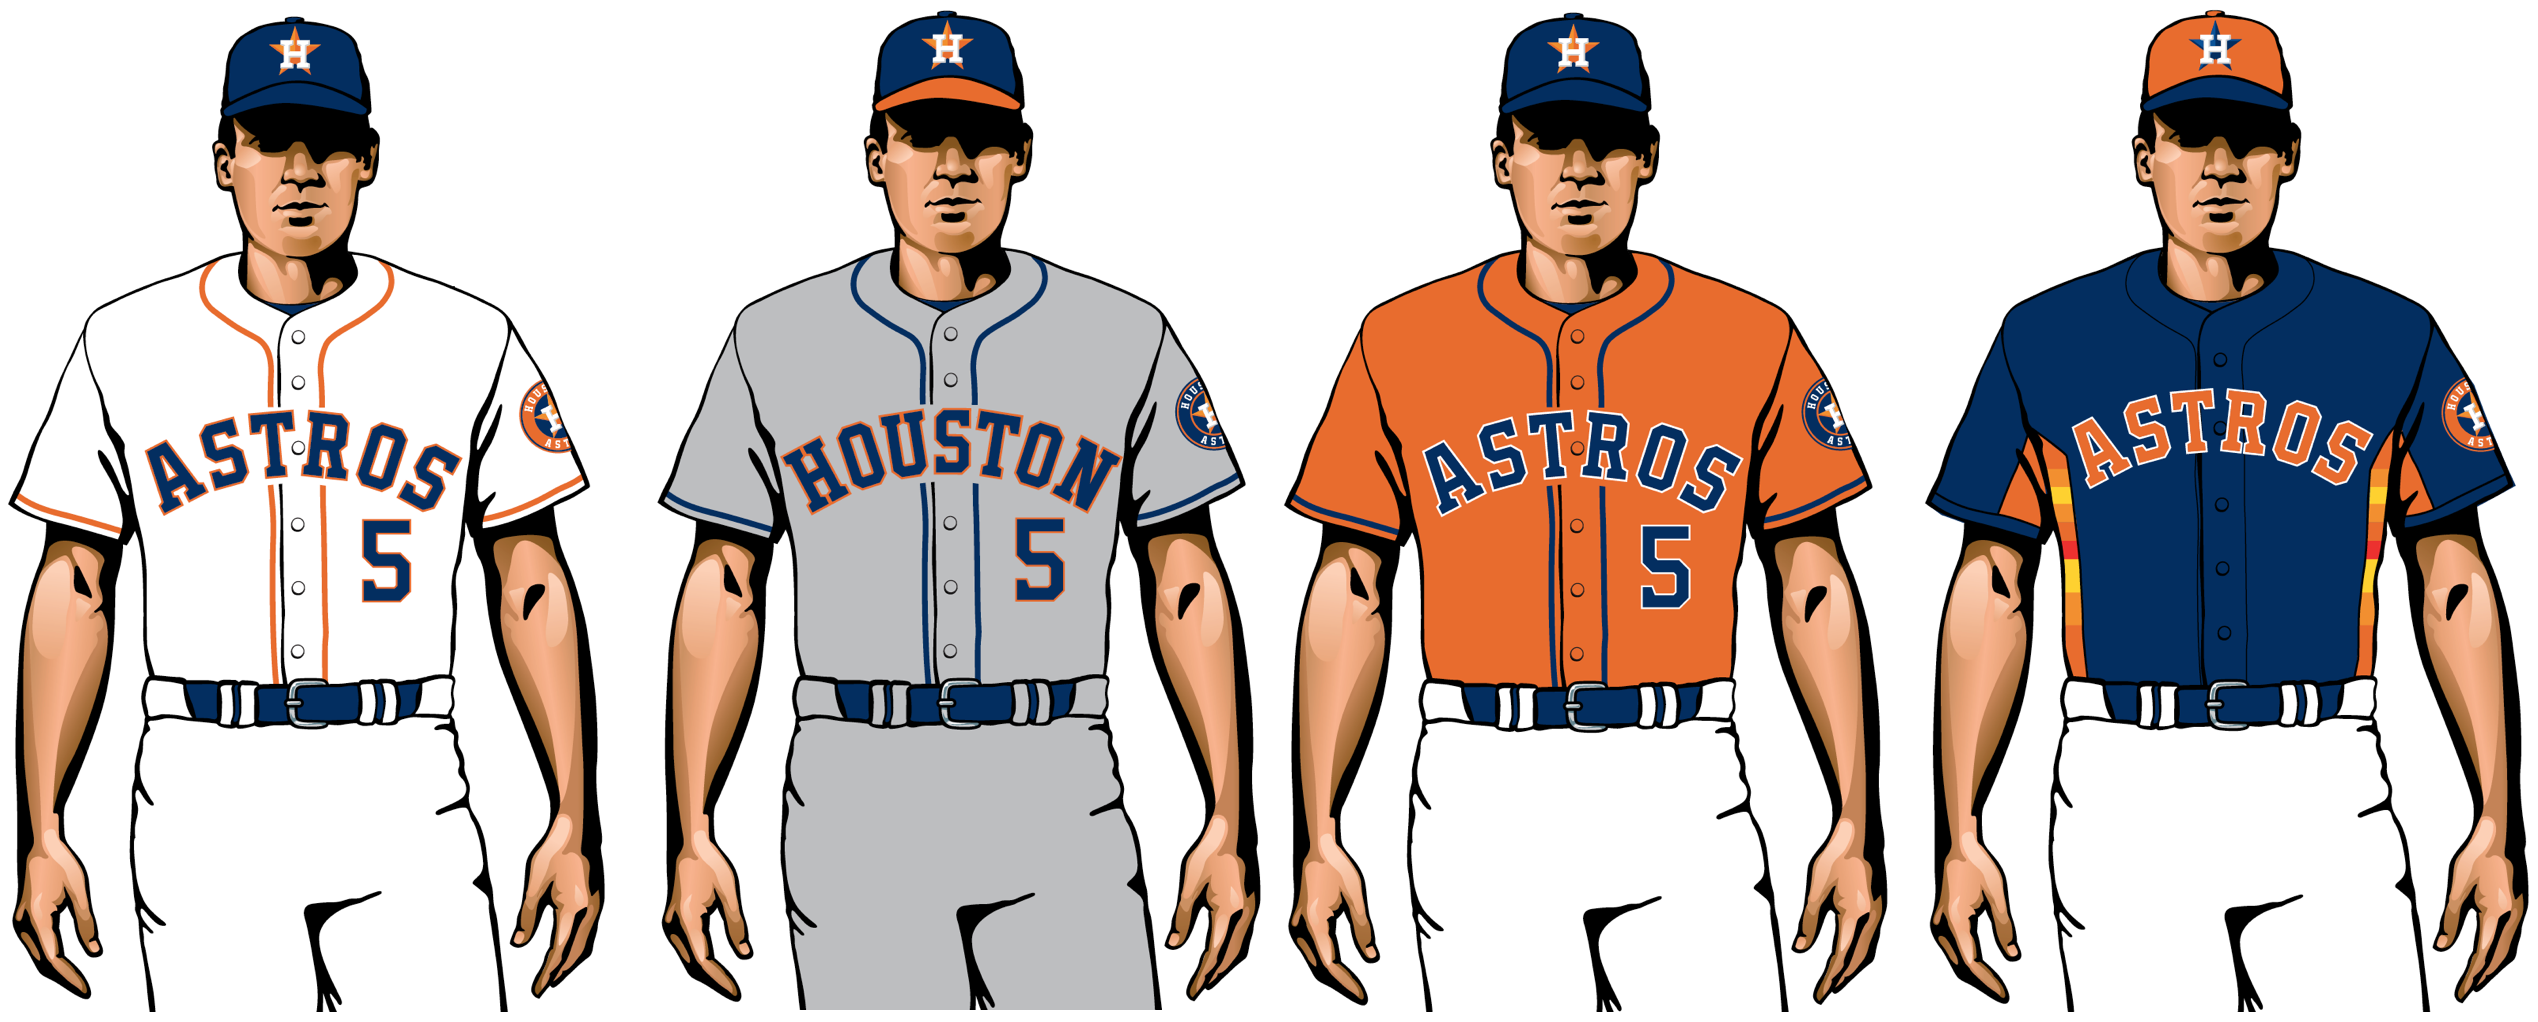 houston astros 2020 uniforms